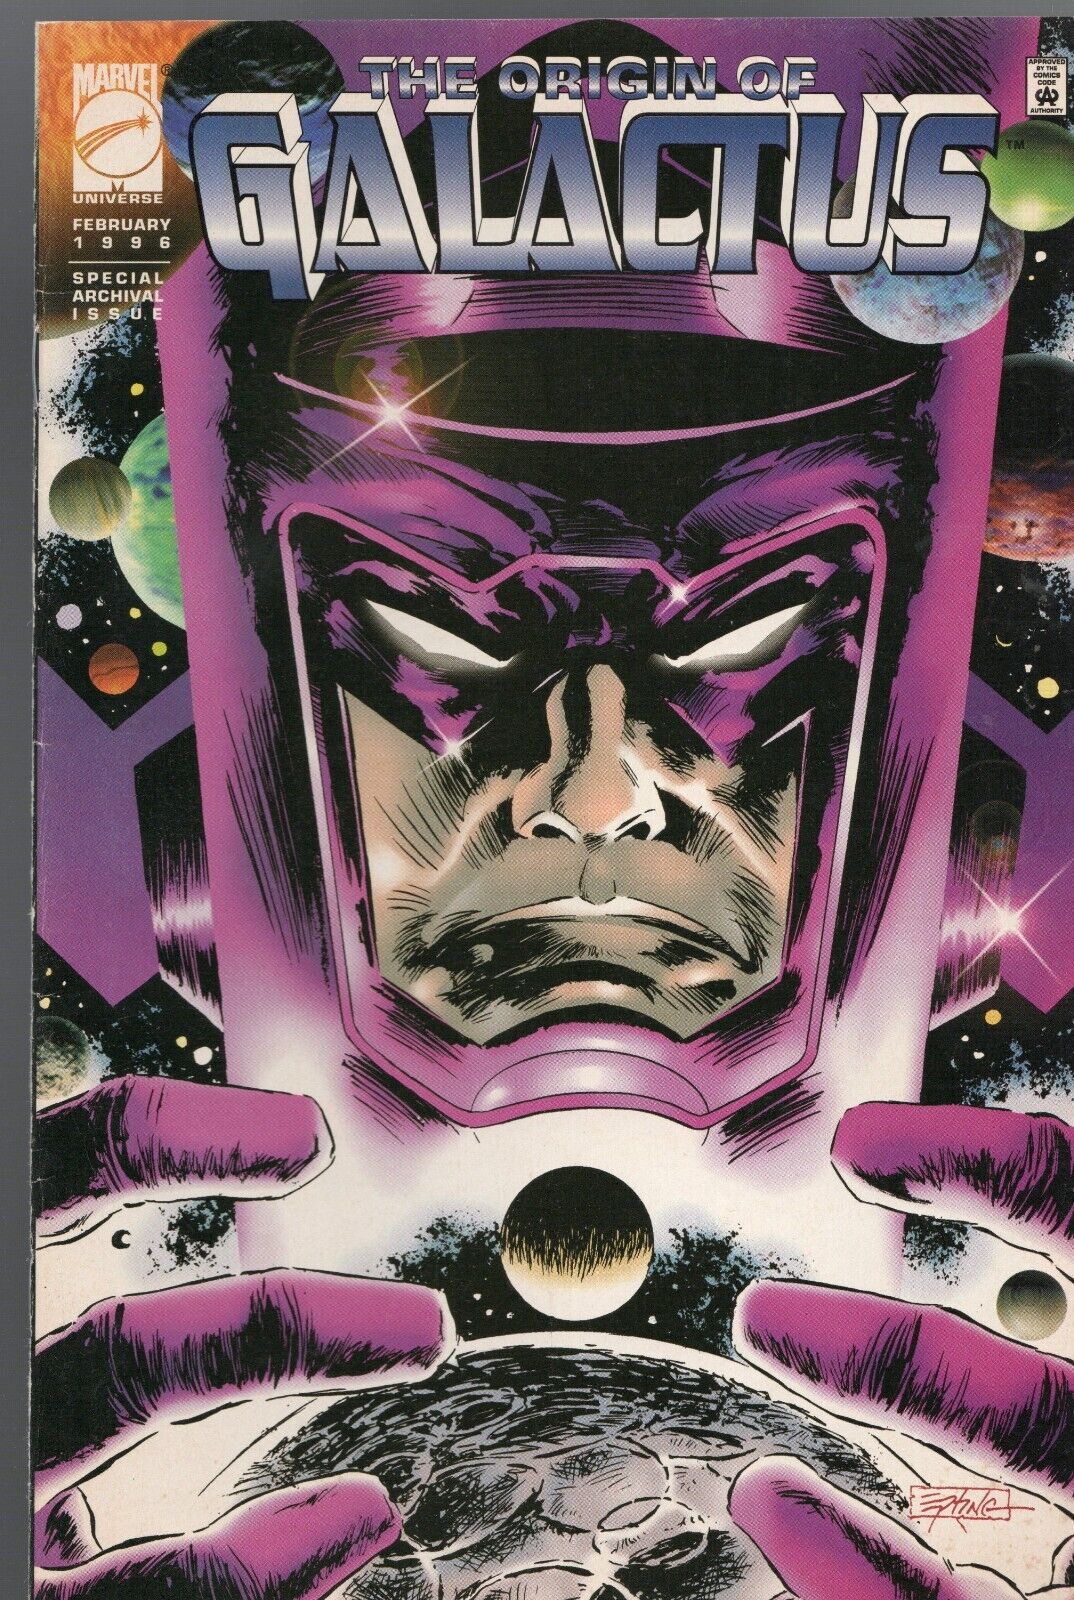 Marvel Universe Comics, The Origin of Galactus, Stan Lee & Jack Kirby, Feb. 1996